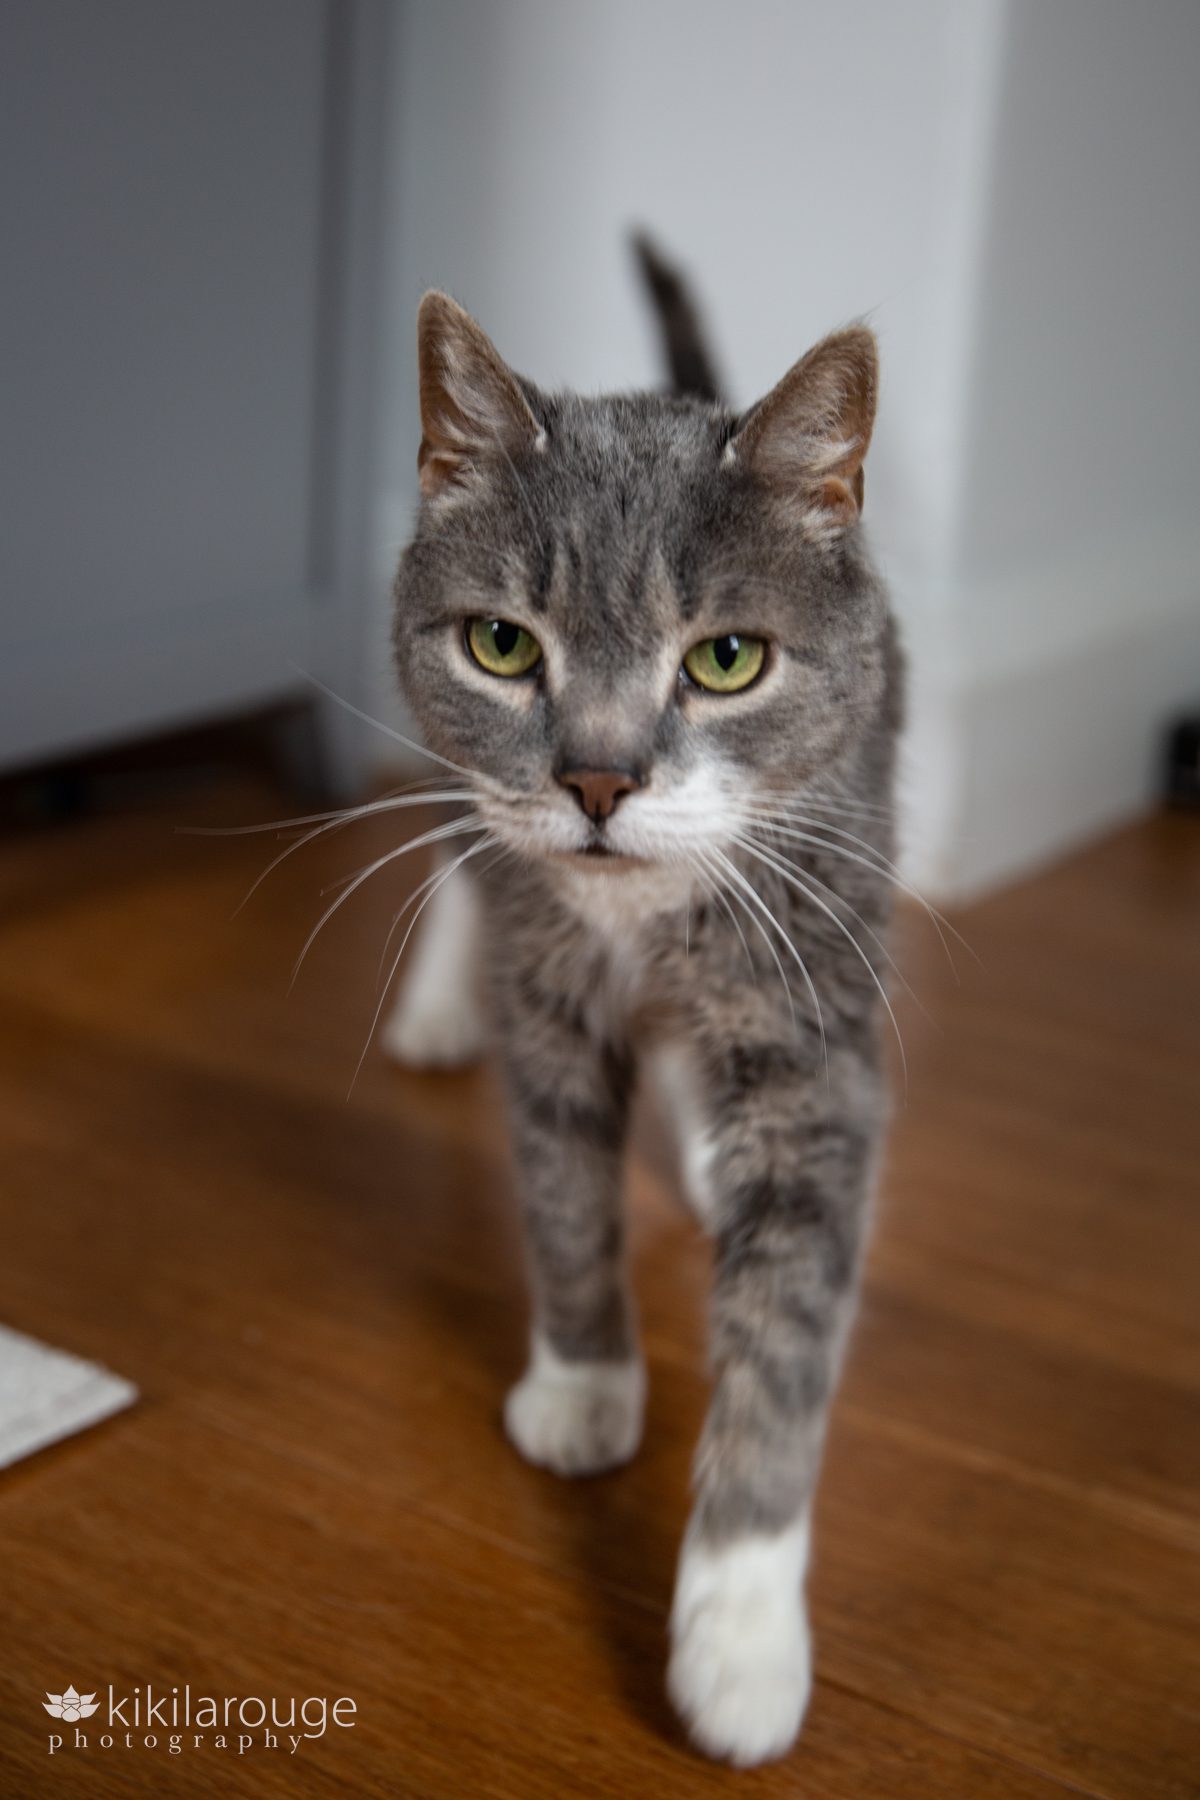 Grey cat with green eyes walking towards the camera